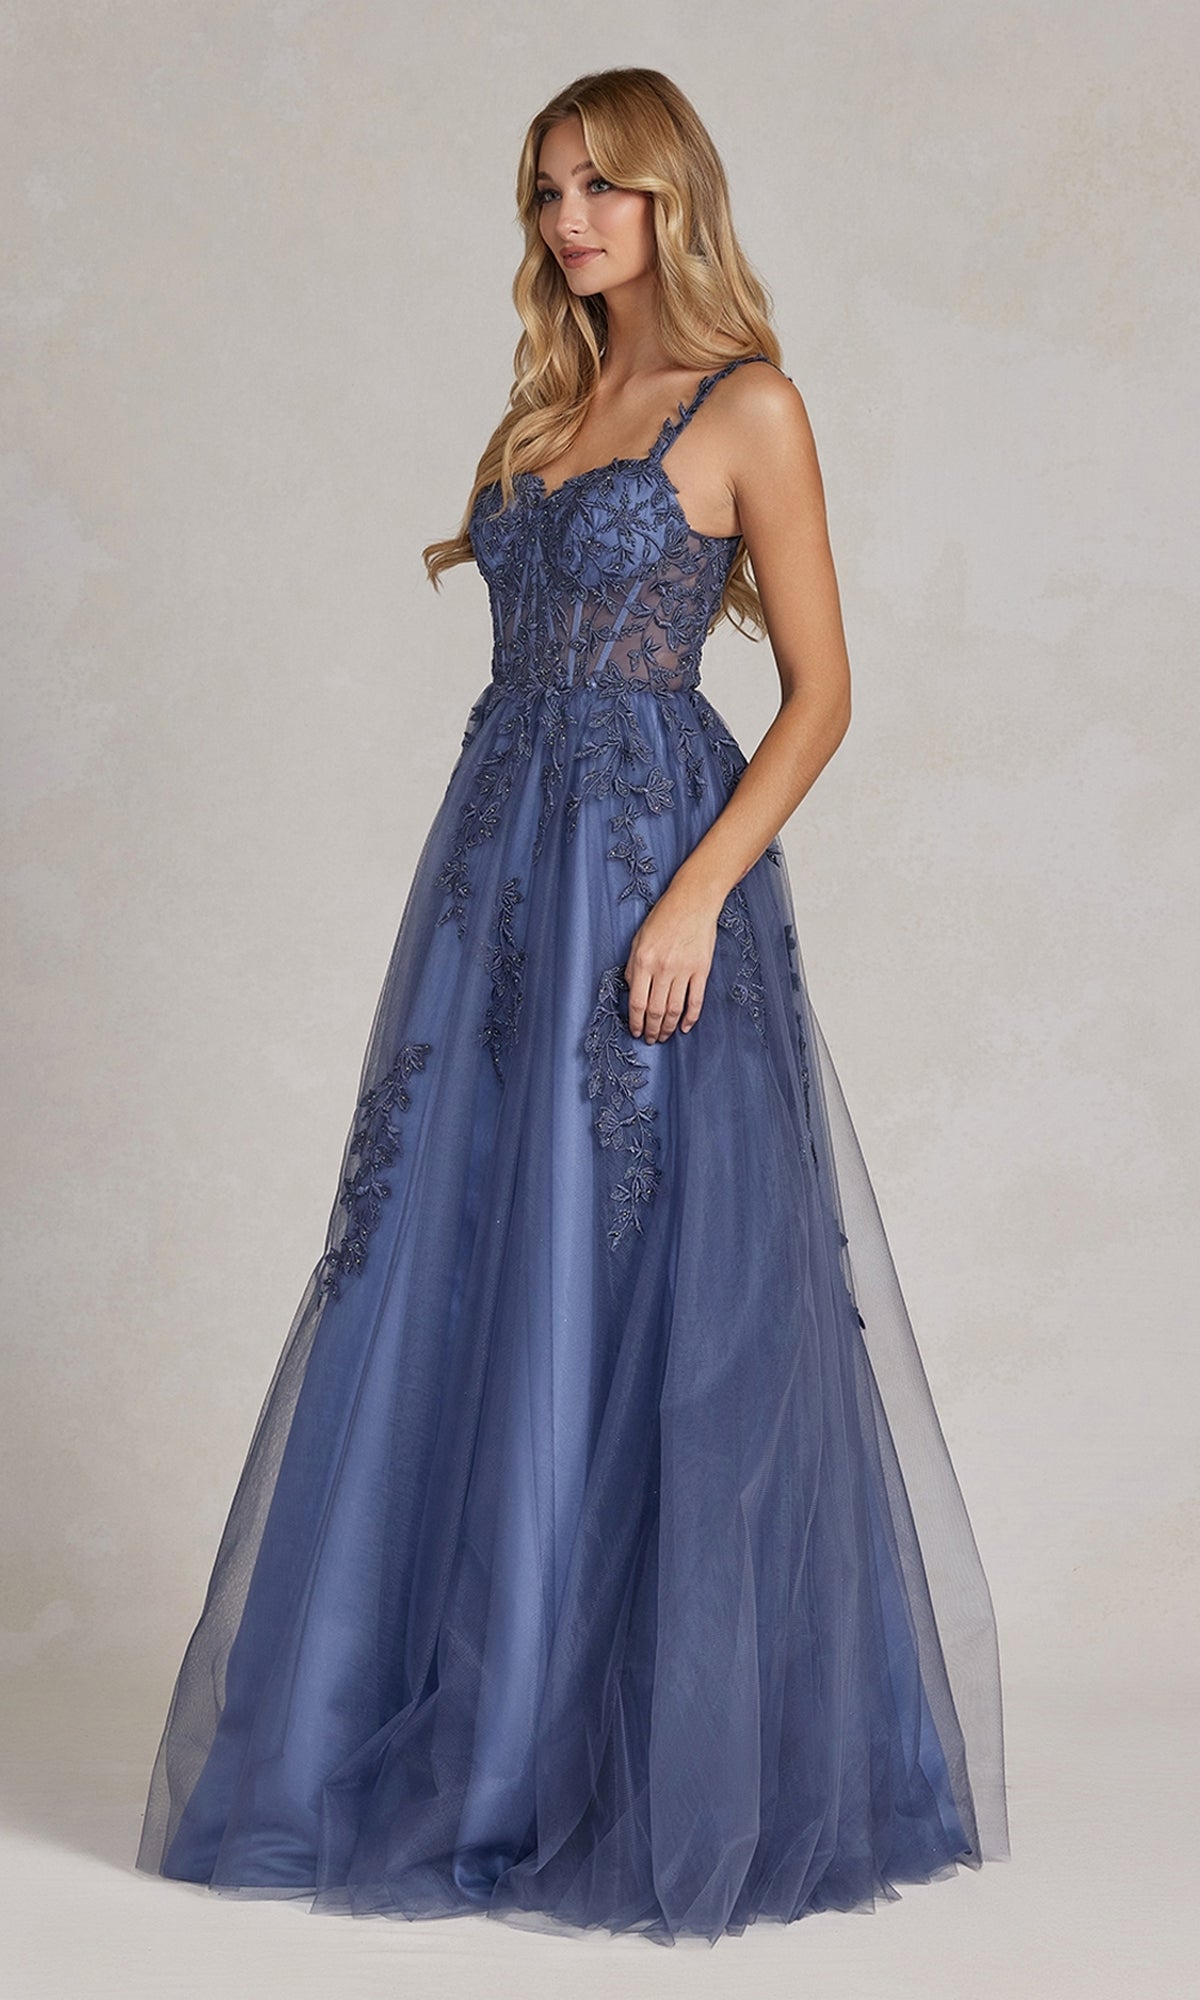 Selinadress Luxury Princess Lace Long Prom Dress Graduation Formal Eve –  SELINADRESS